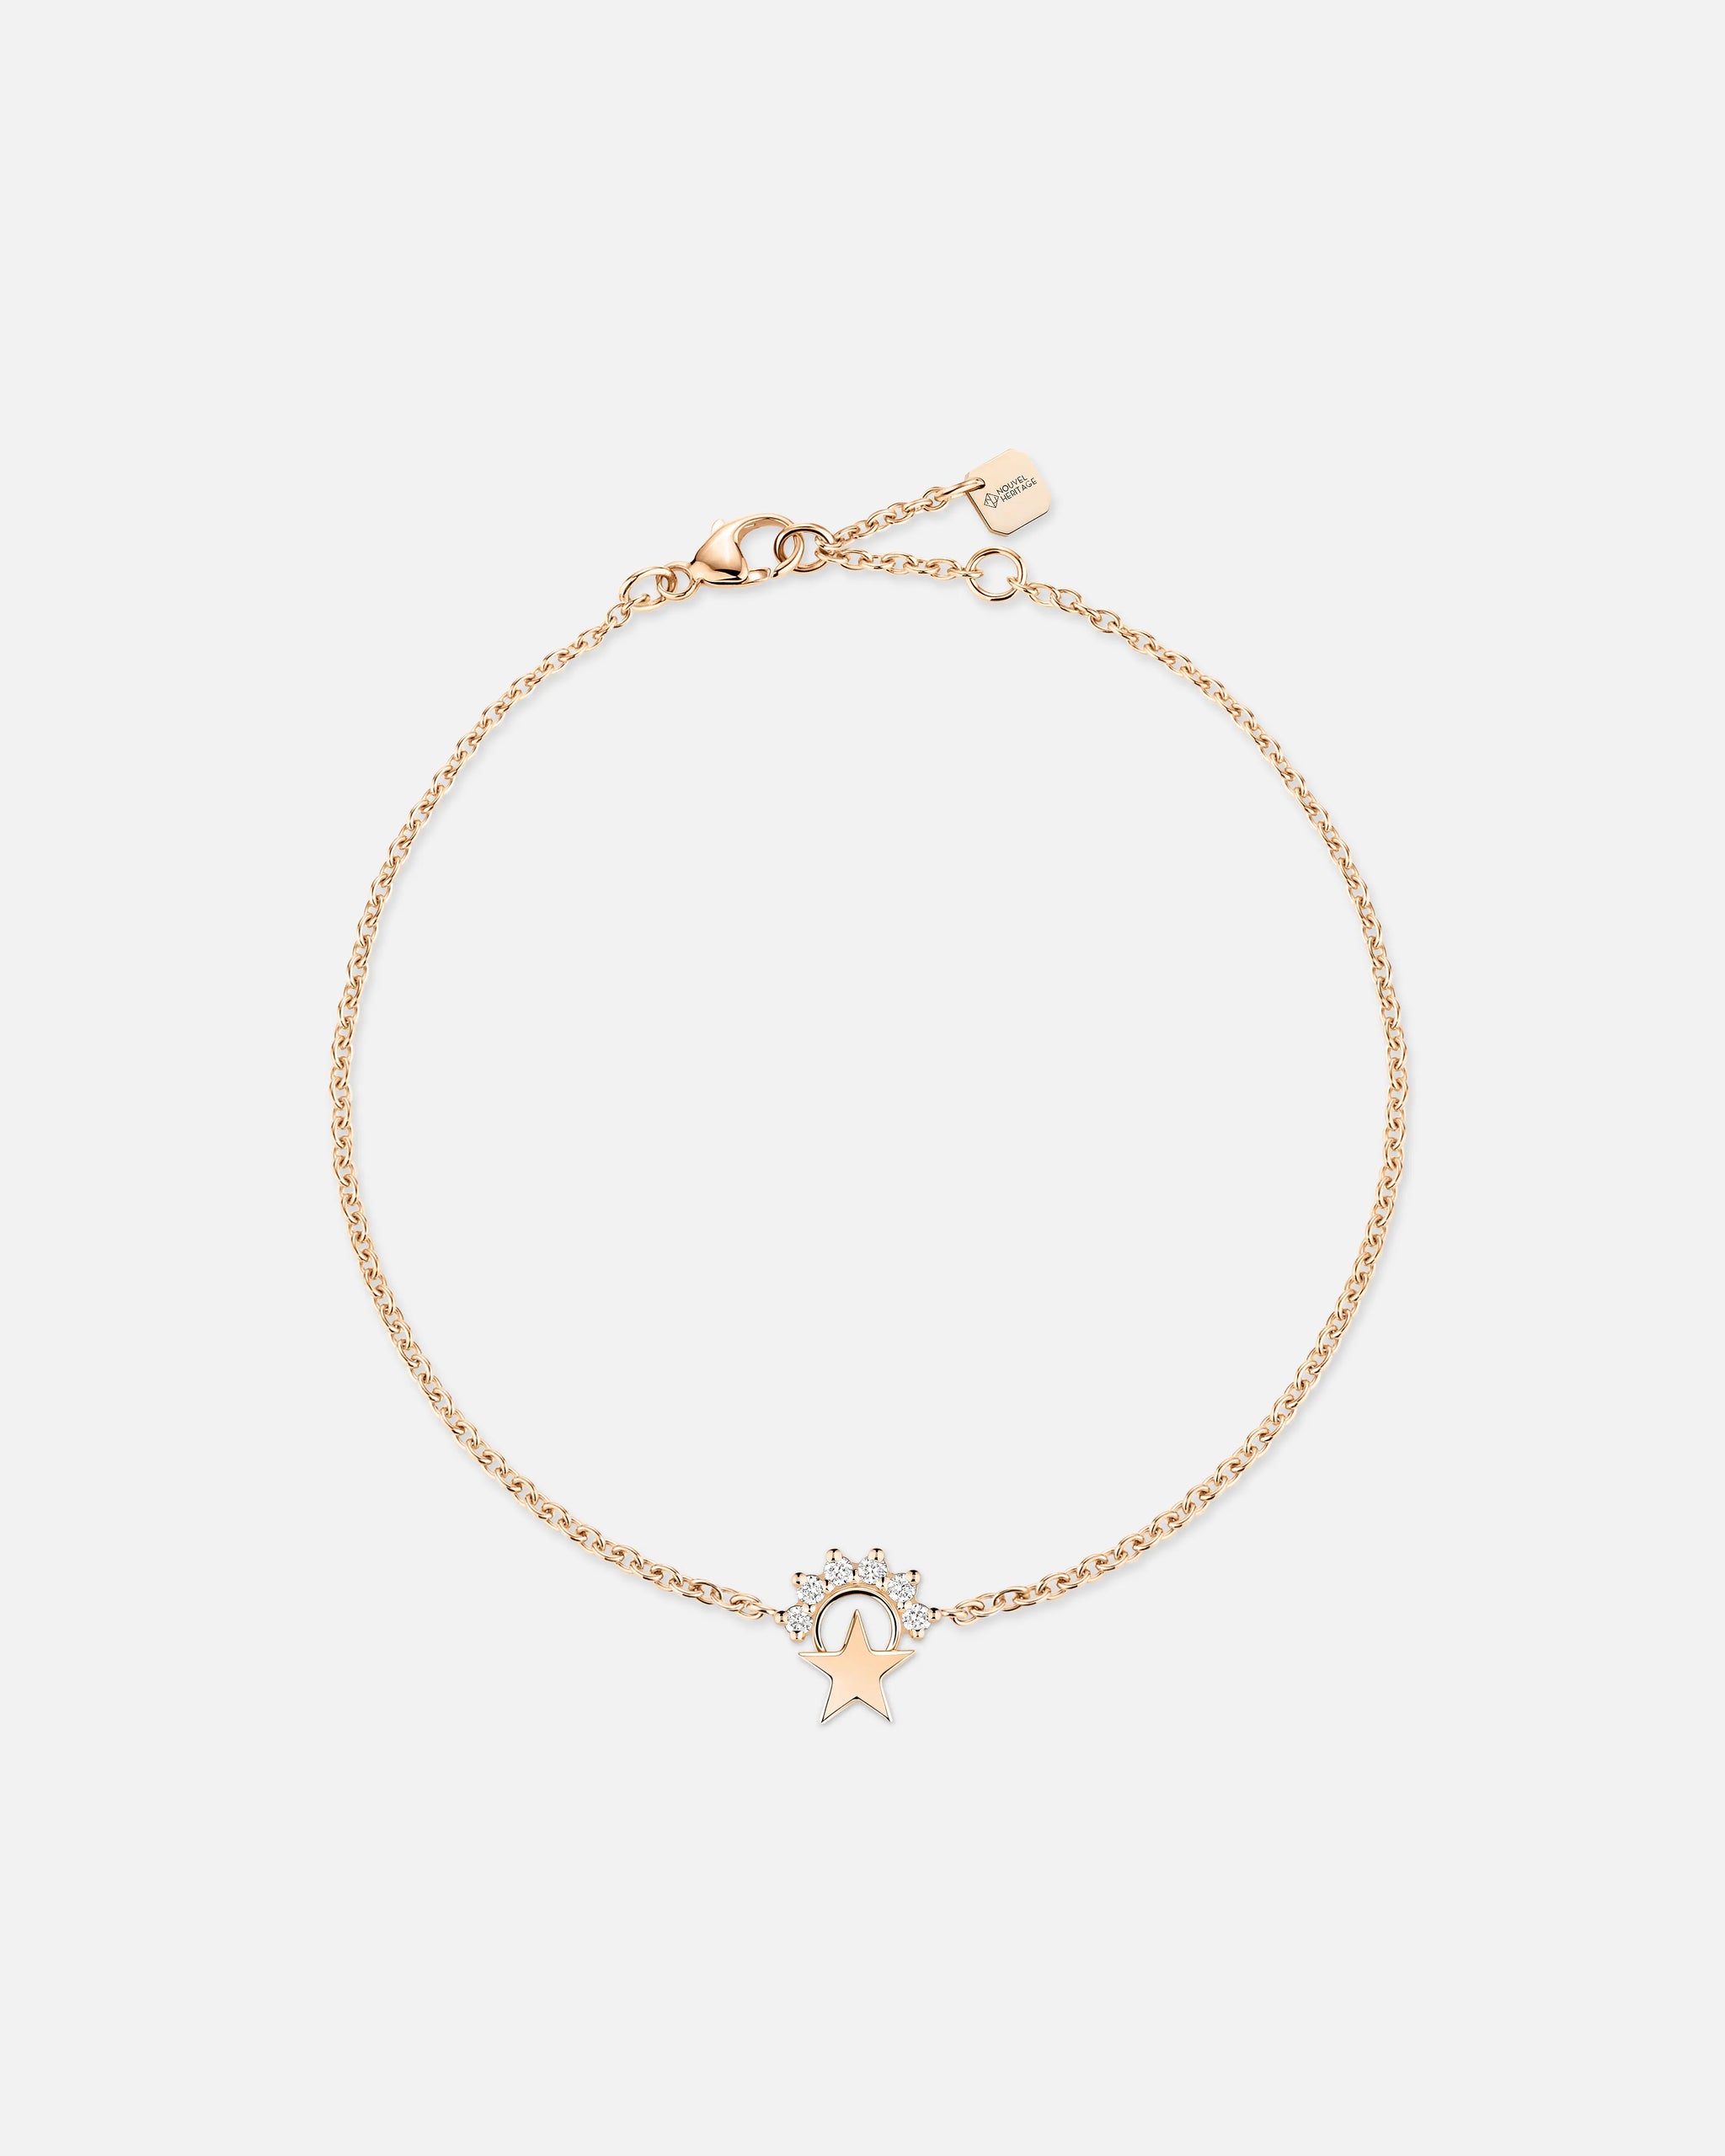 Small Star Bracelet in Rose Gold - 1 - Nouvel Heritage